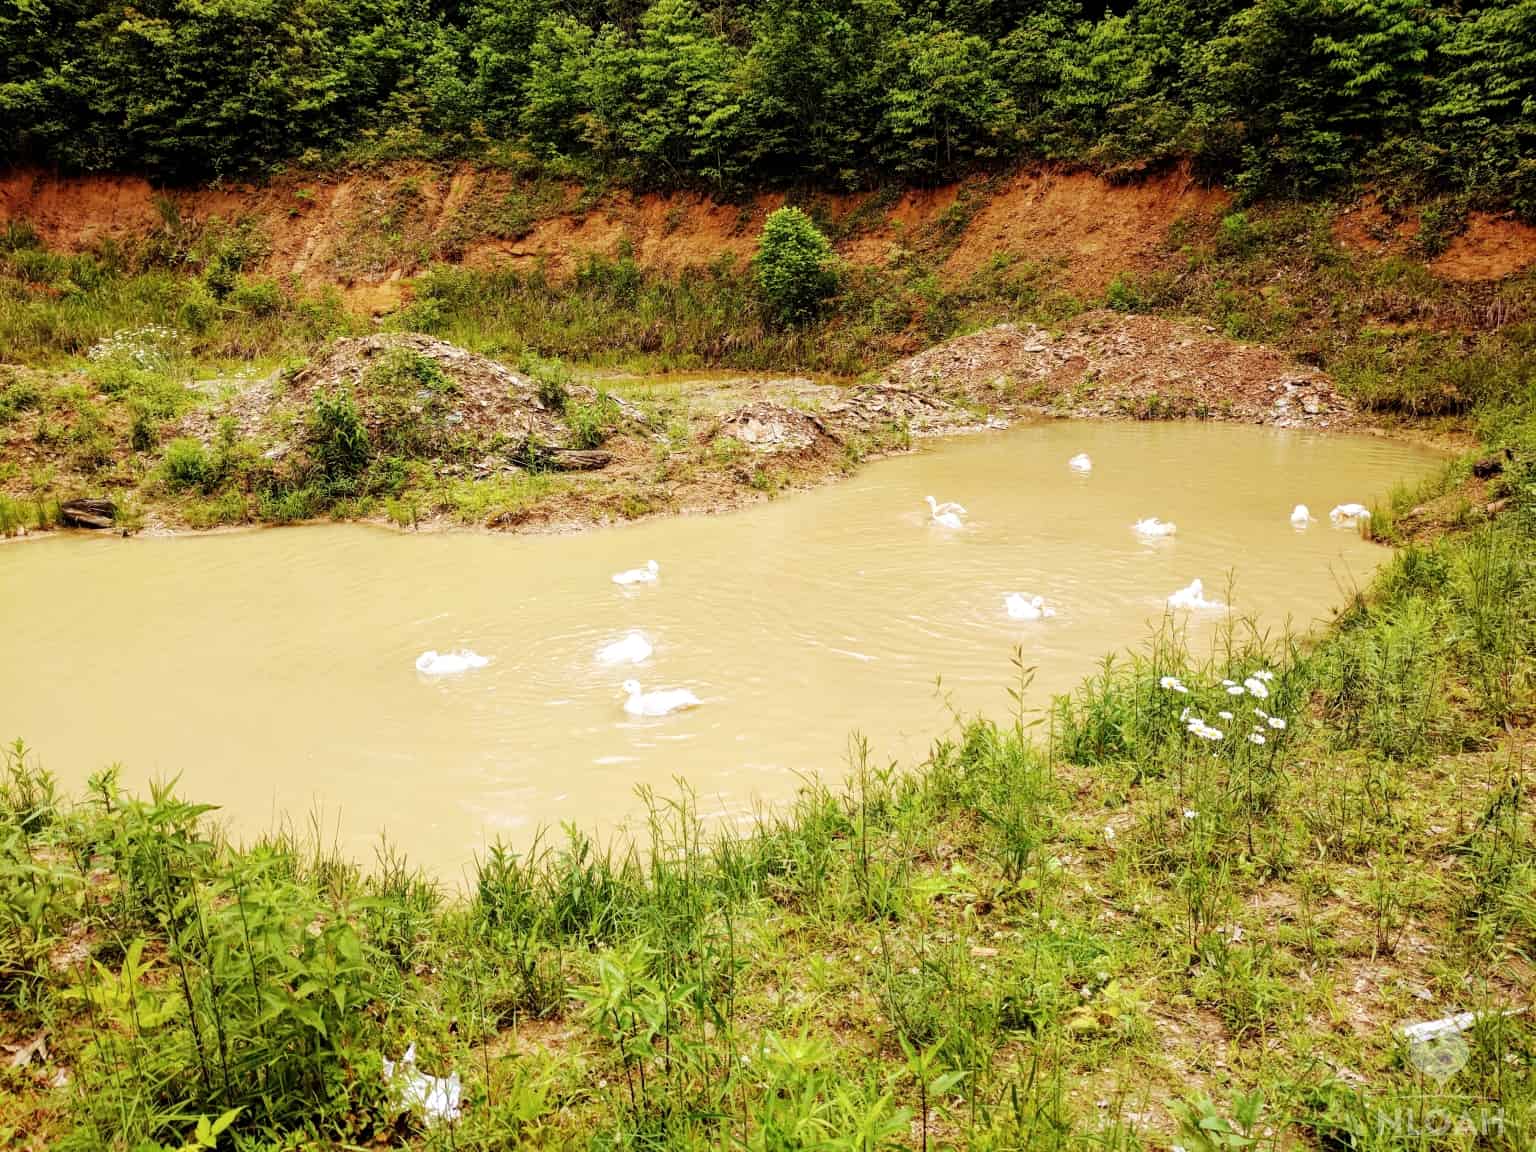 Pekin ducks in pond on the homestead